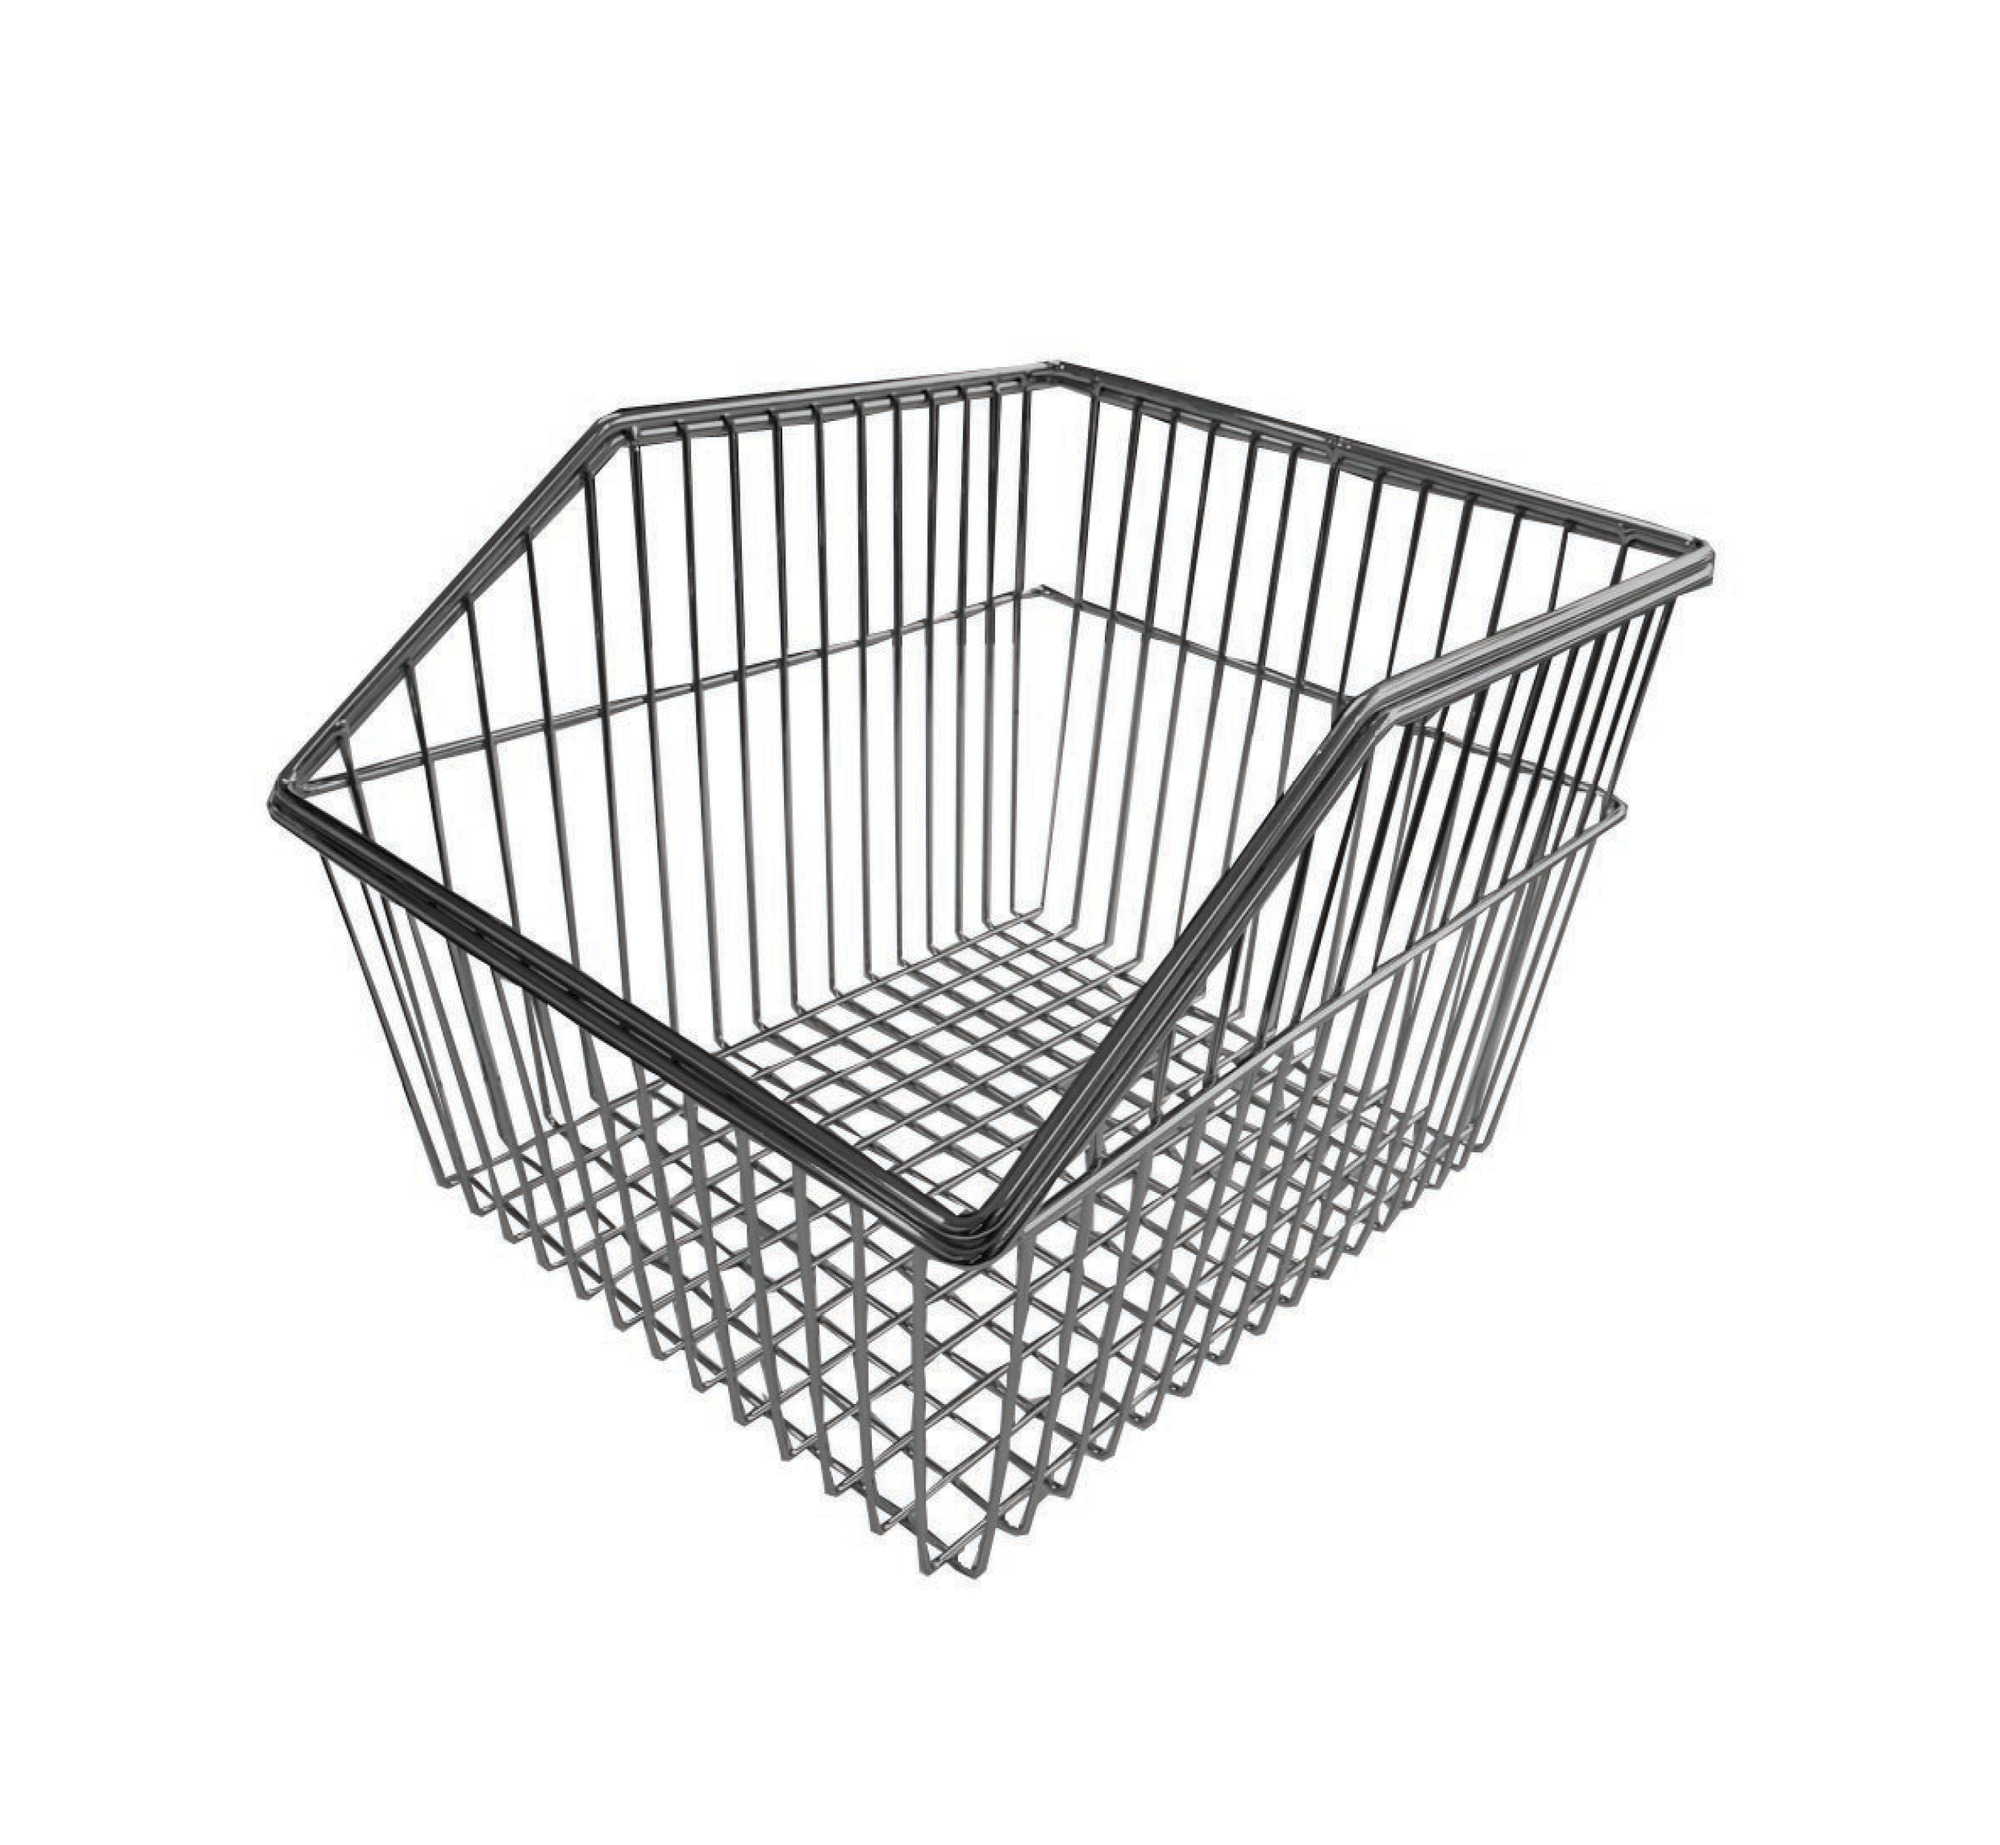 Wired Baskets, storage solutions